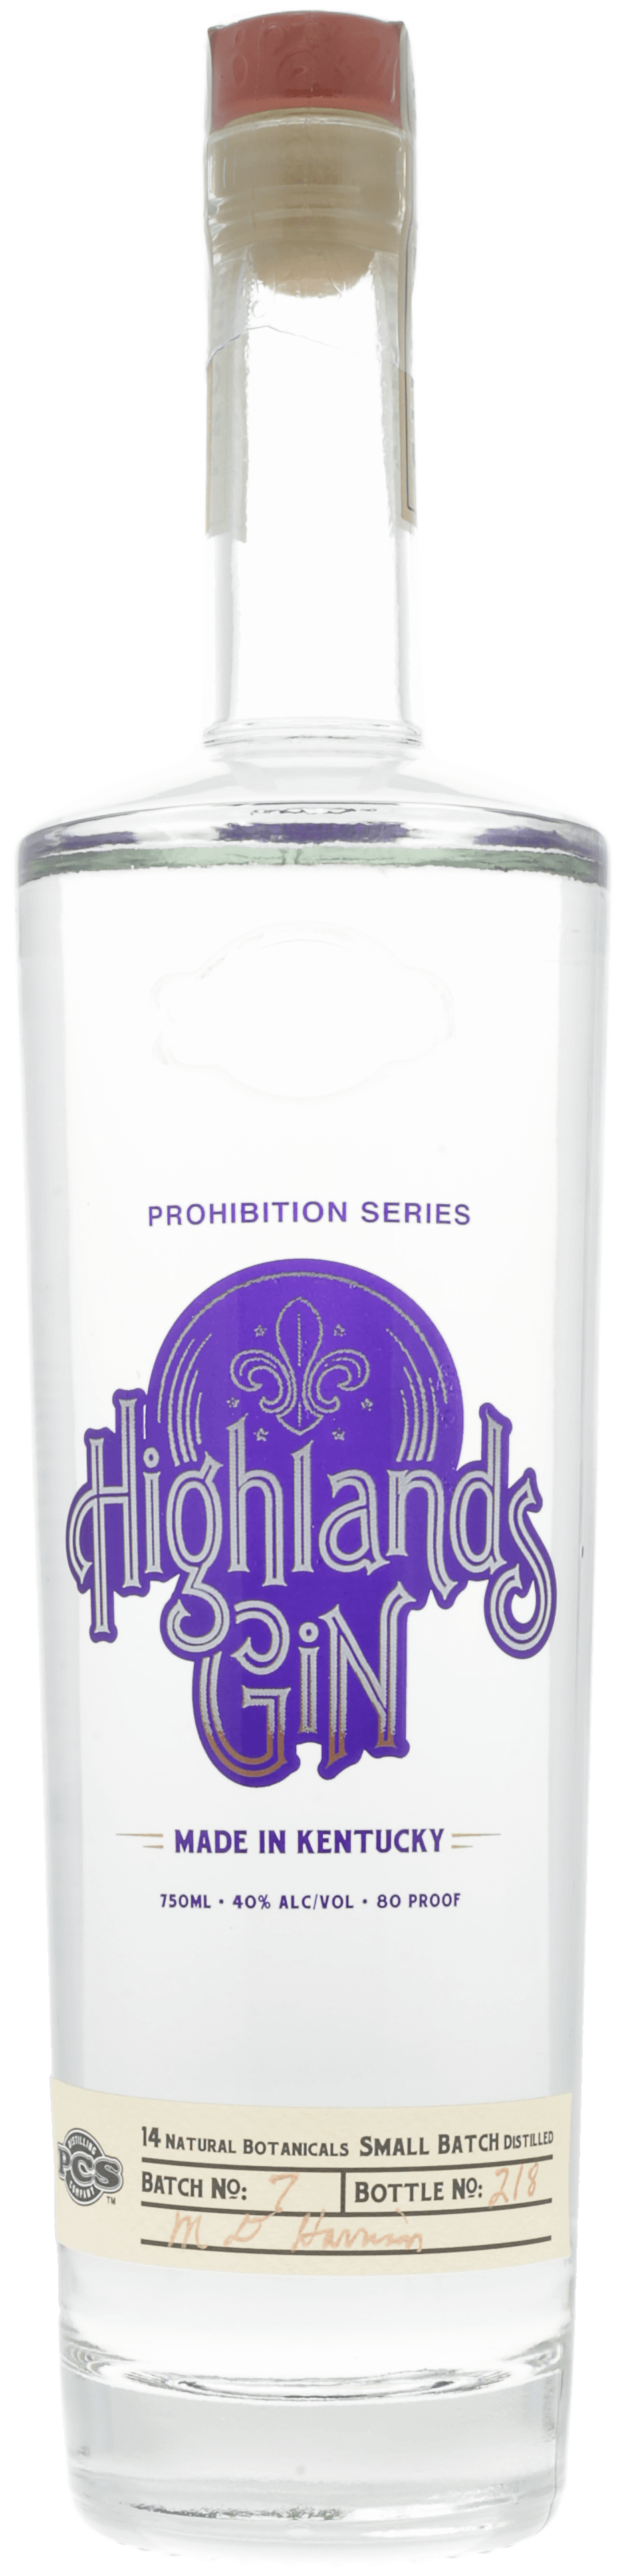 Highlands Gin